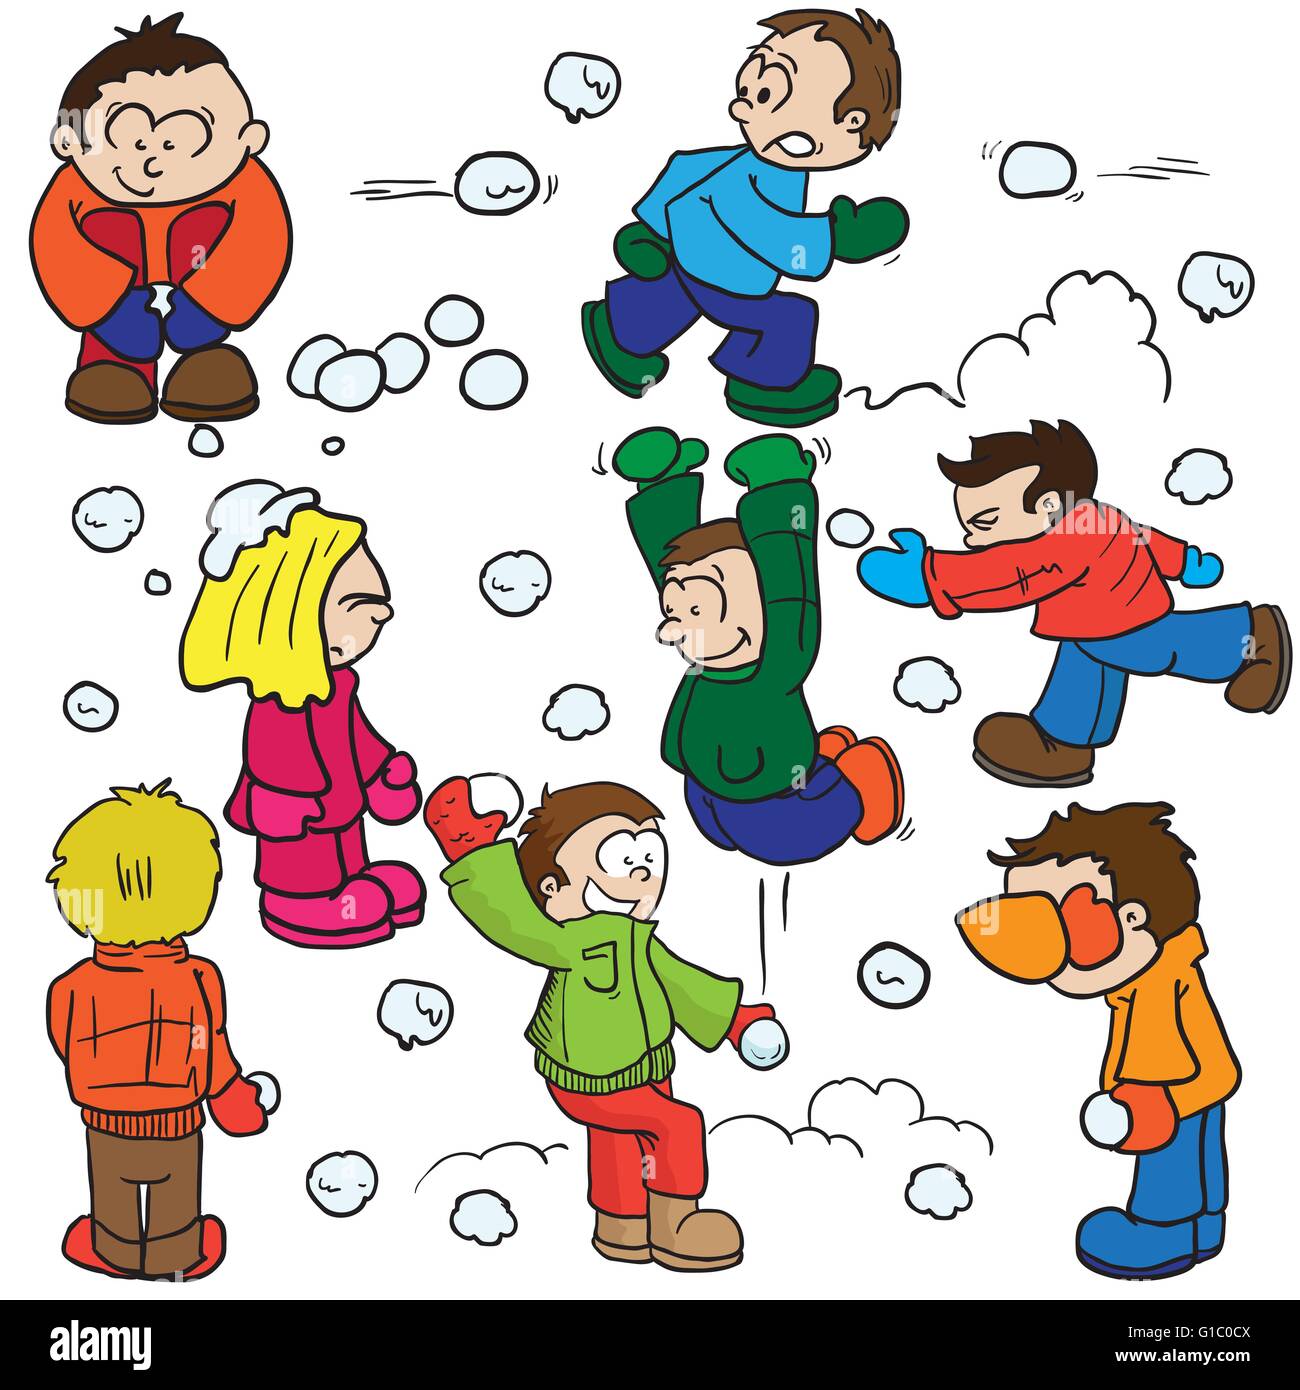 snowball fight cartoon illustration Stock Vector